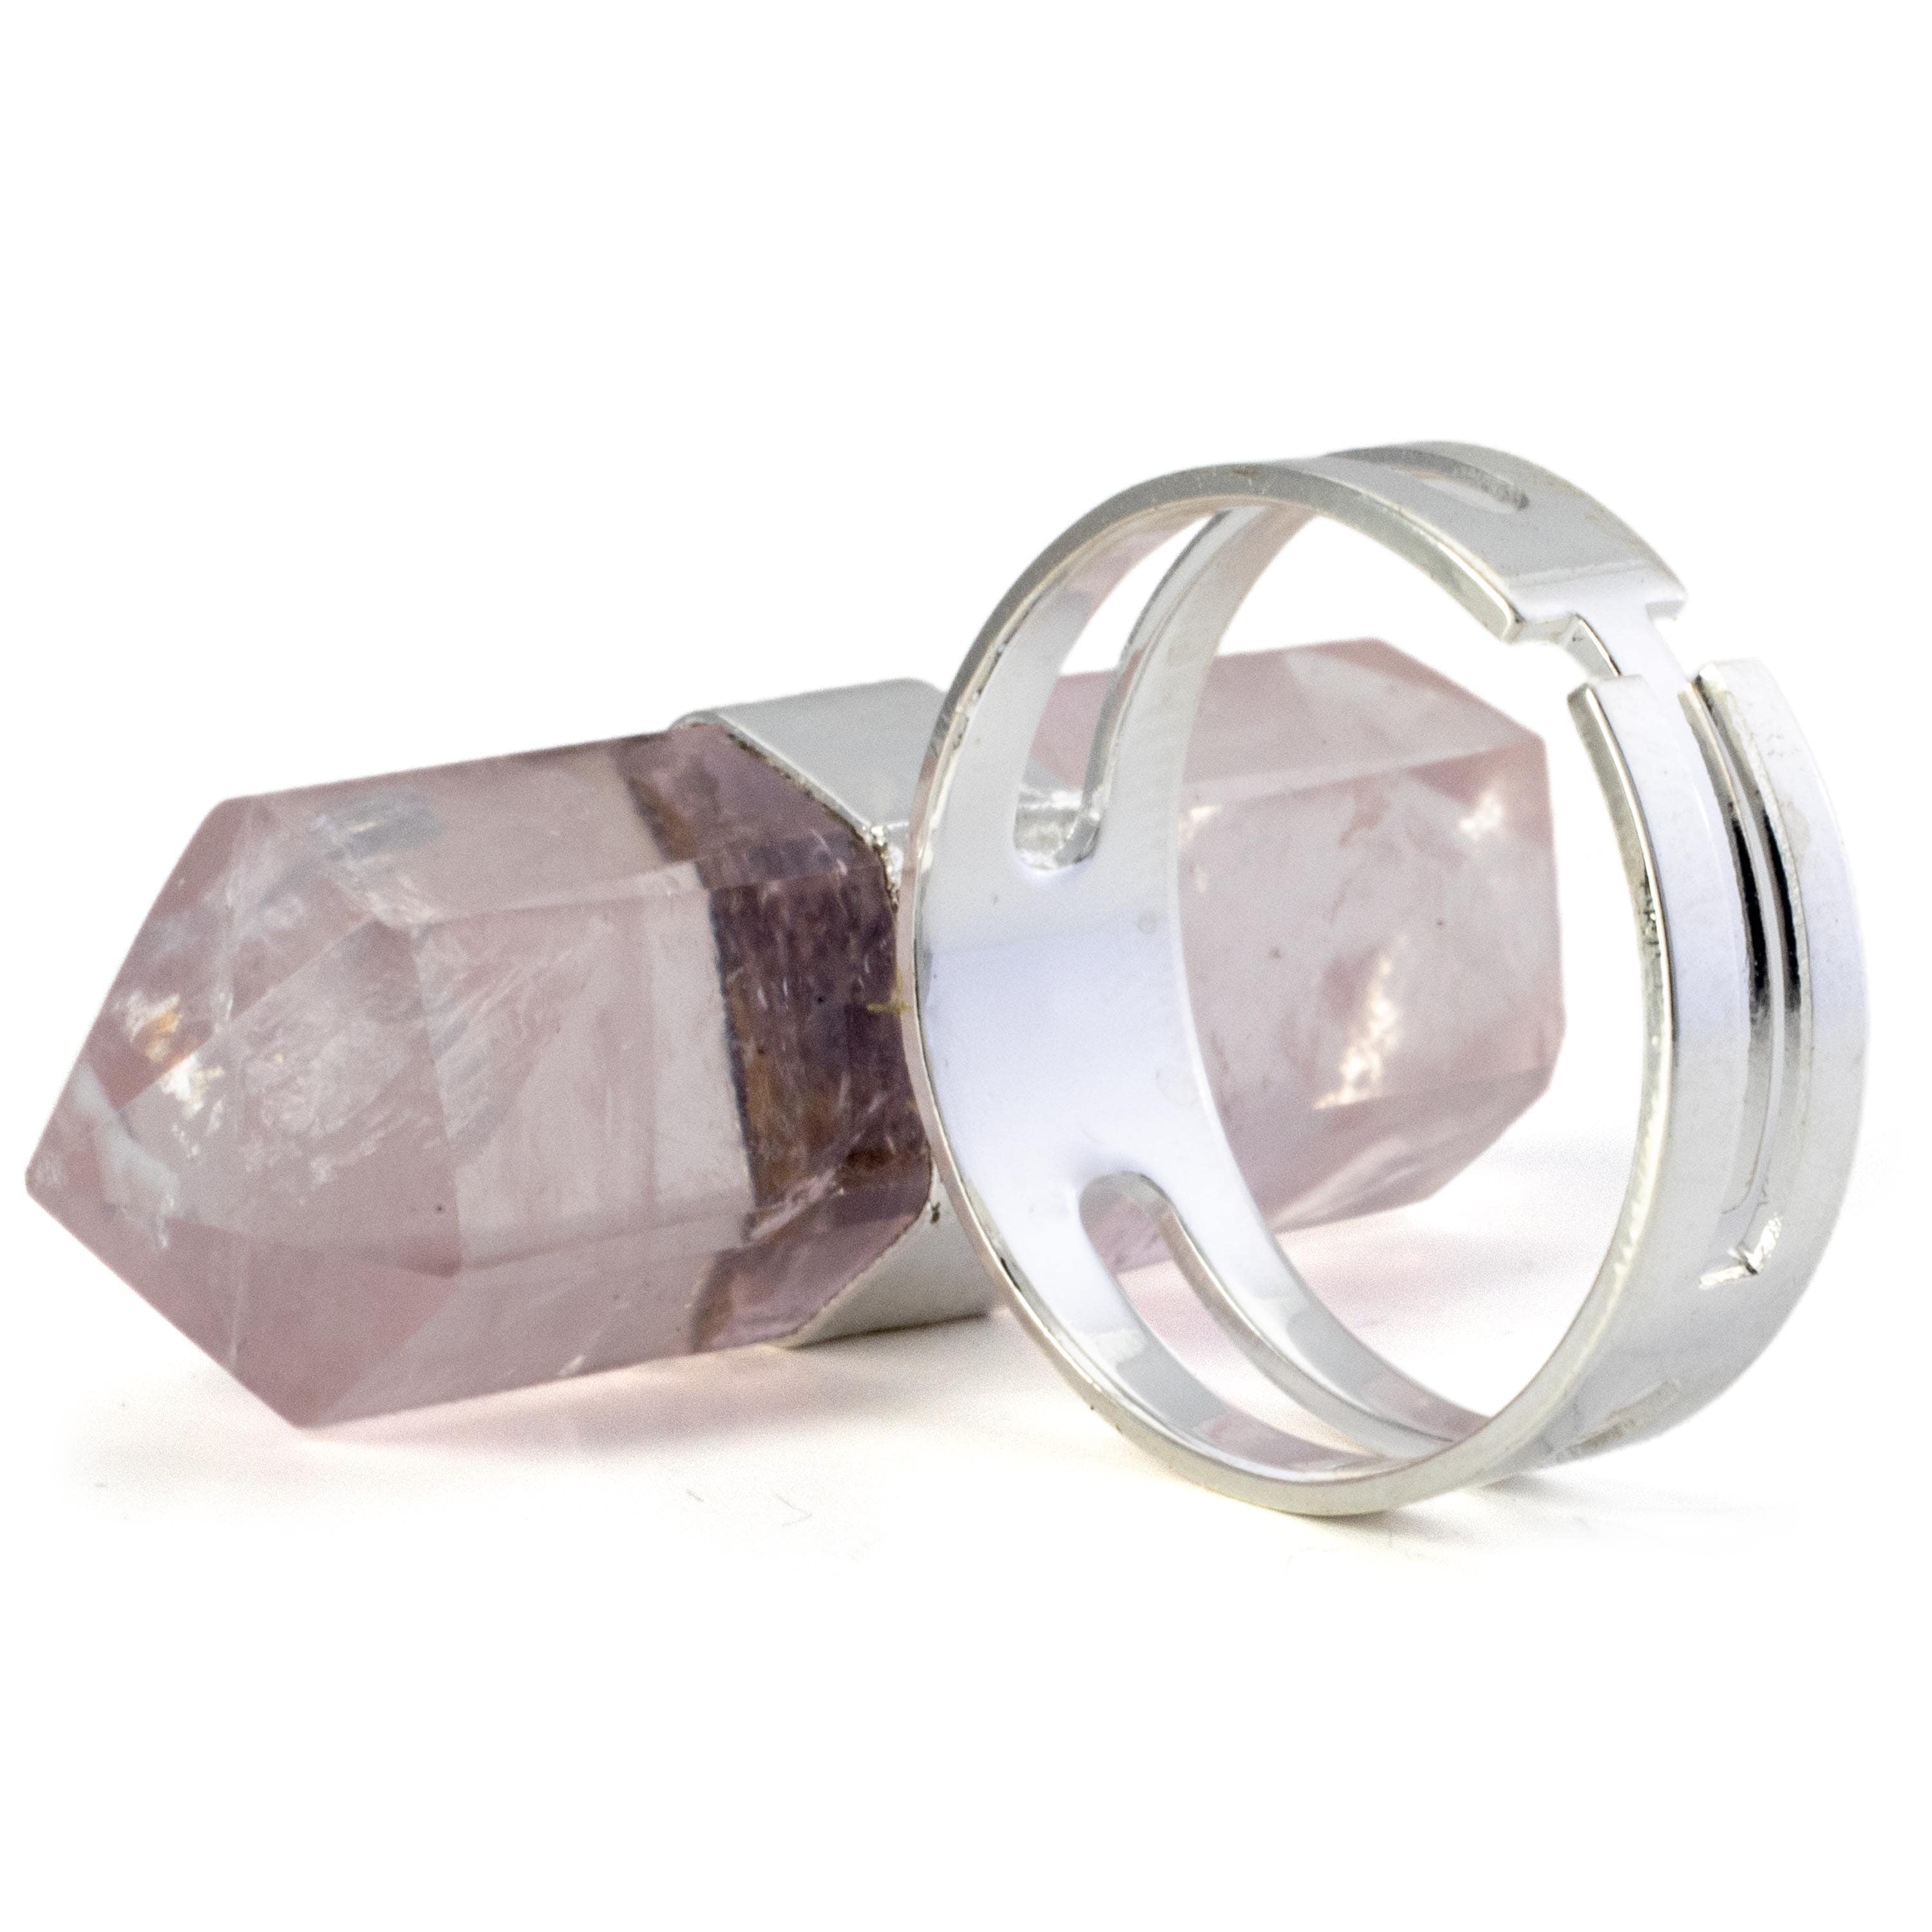 Kalifano Crystal Jewelry Large Rose Quartz Adjustable Ring CJR-MJL-RQ